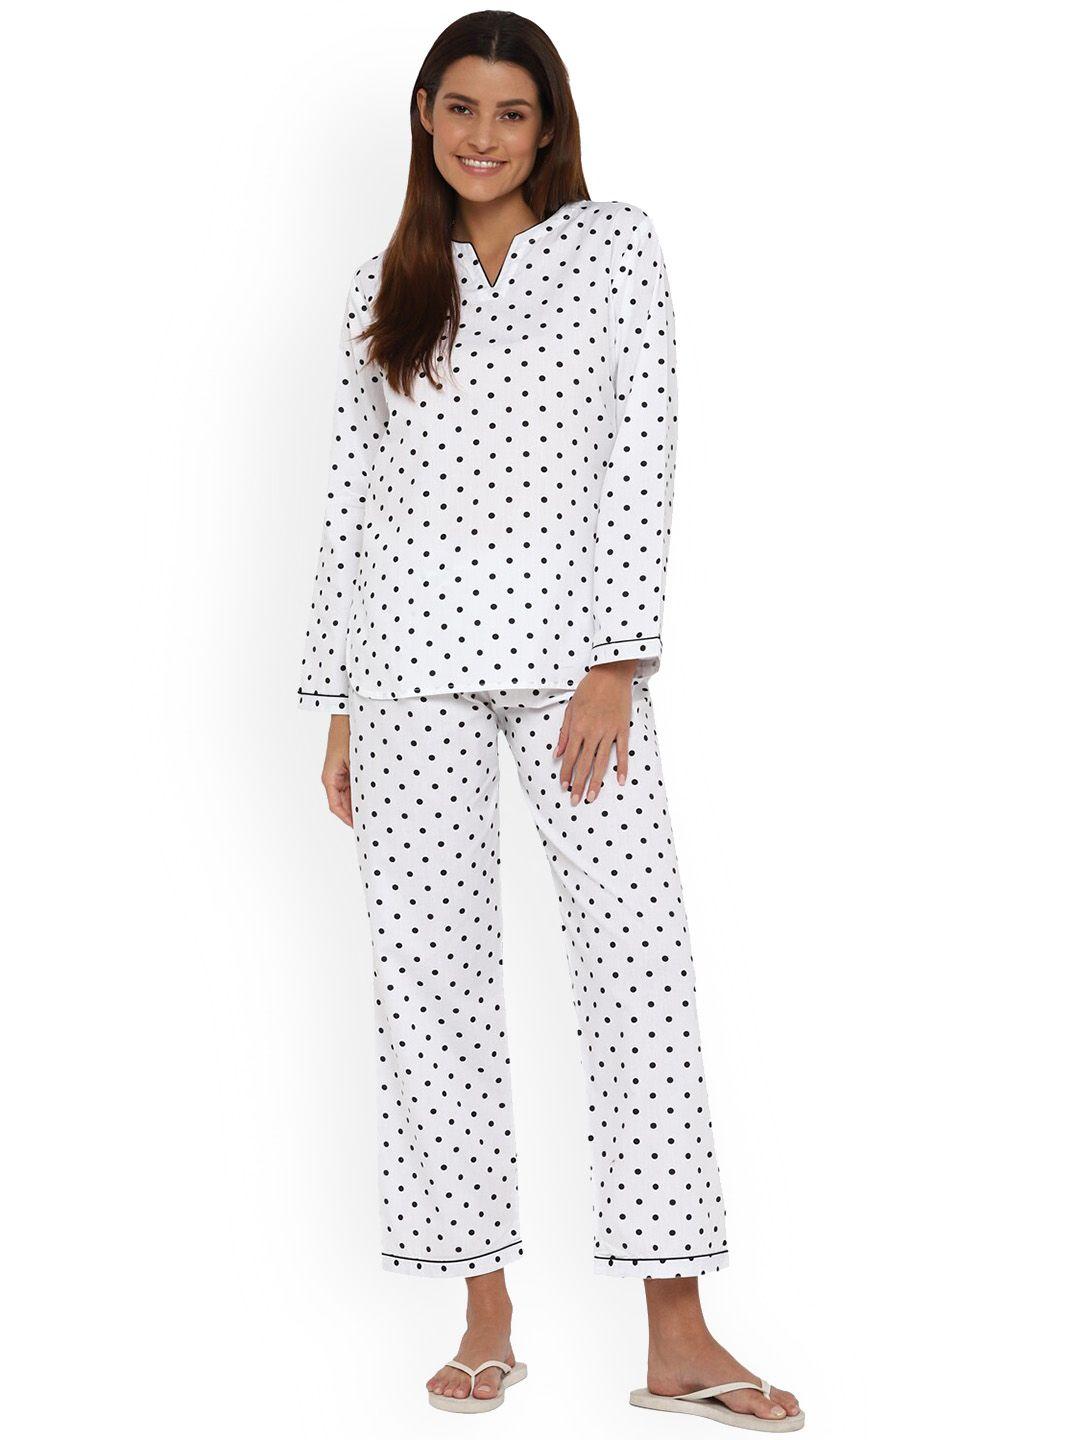 shopbloom-women-white-&-black-polka-dot-printed-night-suit